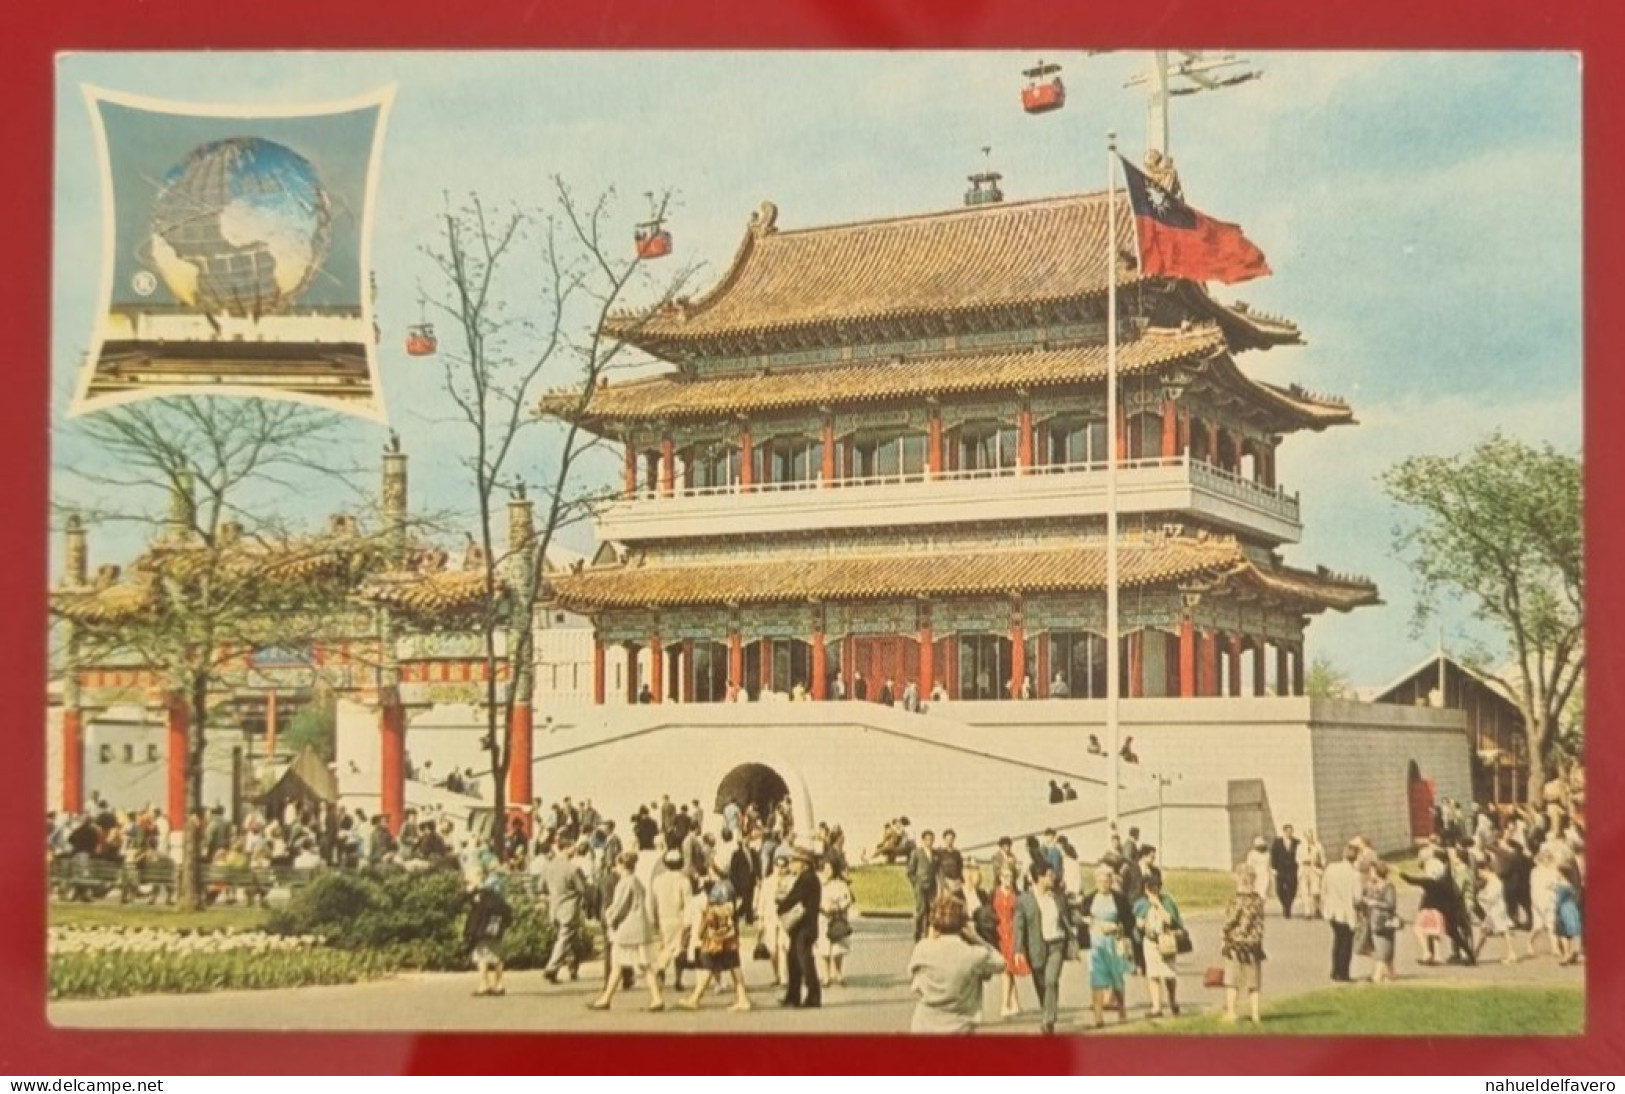 Uncirculated Postcard - USA - NY, NEW YORK WORLD'S FAIR 1964-65 - REPUBLICOF CHINA PAVILION - Mostre, Esposizioni